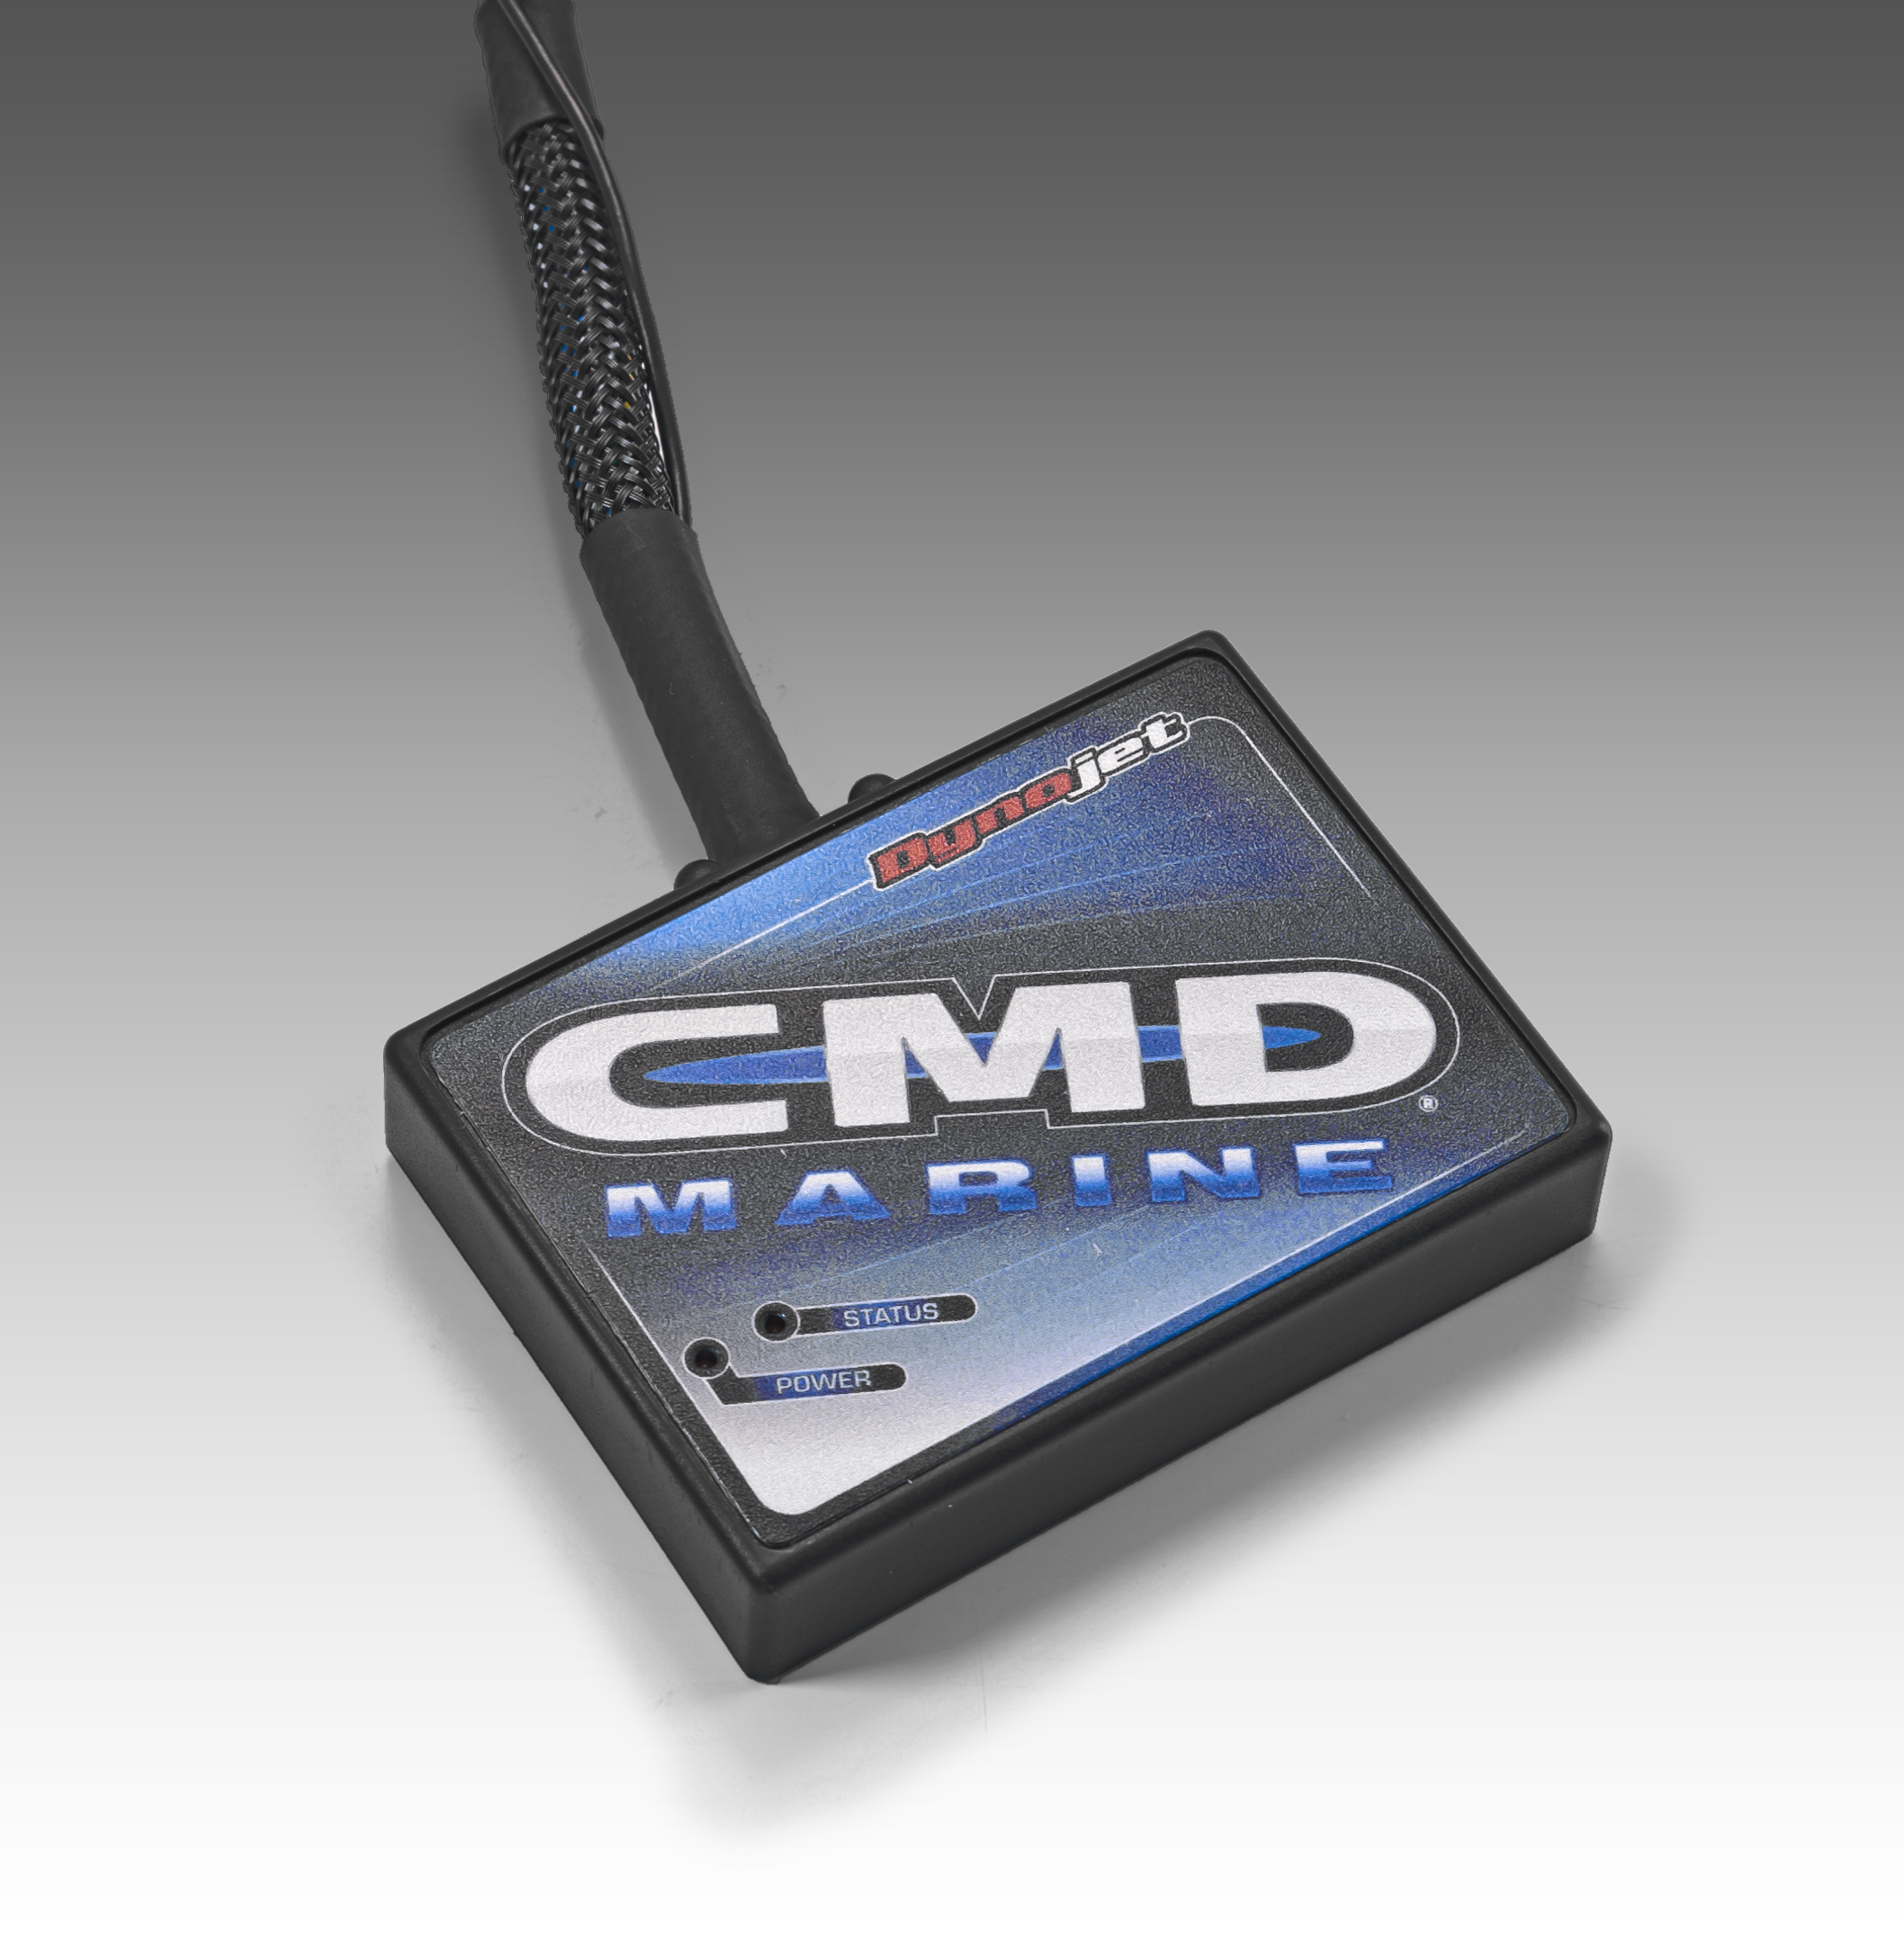 cmdm-5012.jpg